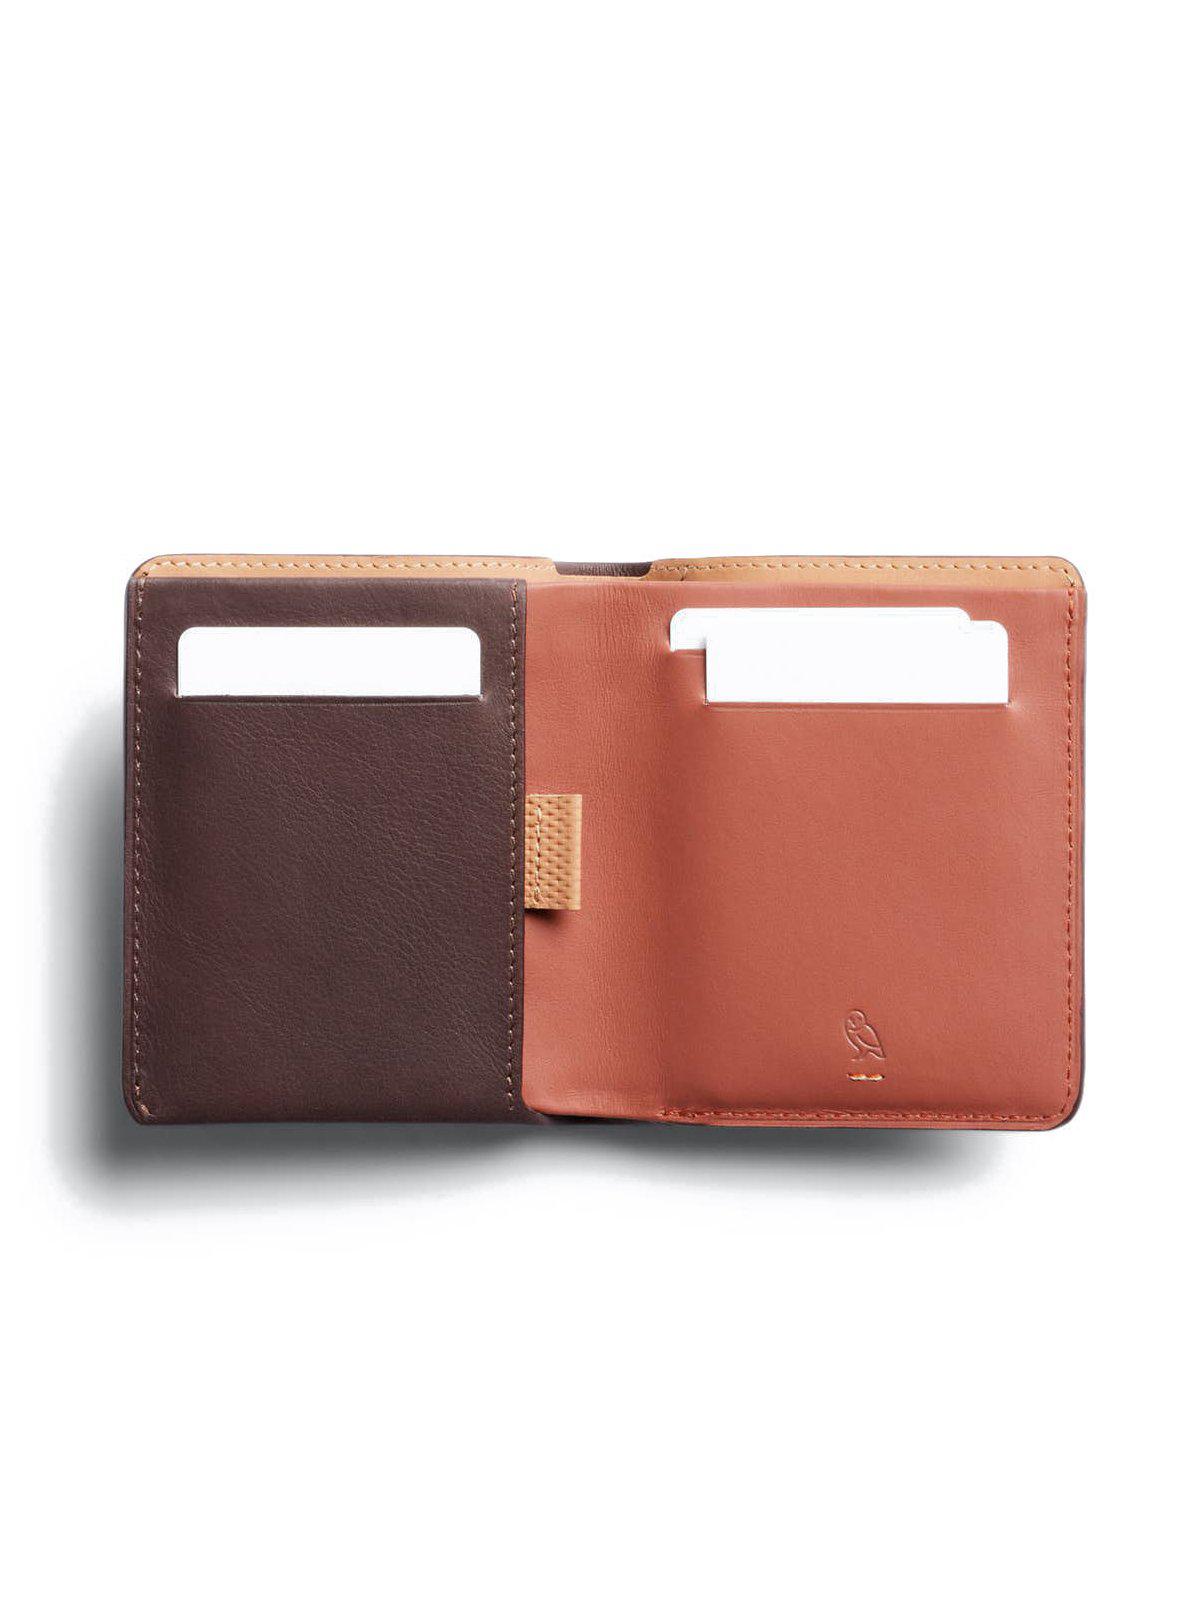 Bellroy Note Sleeve Wallet Premium Edition Aragon RFID